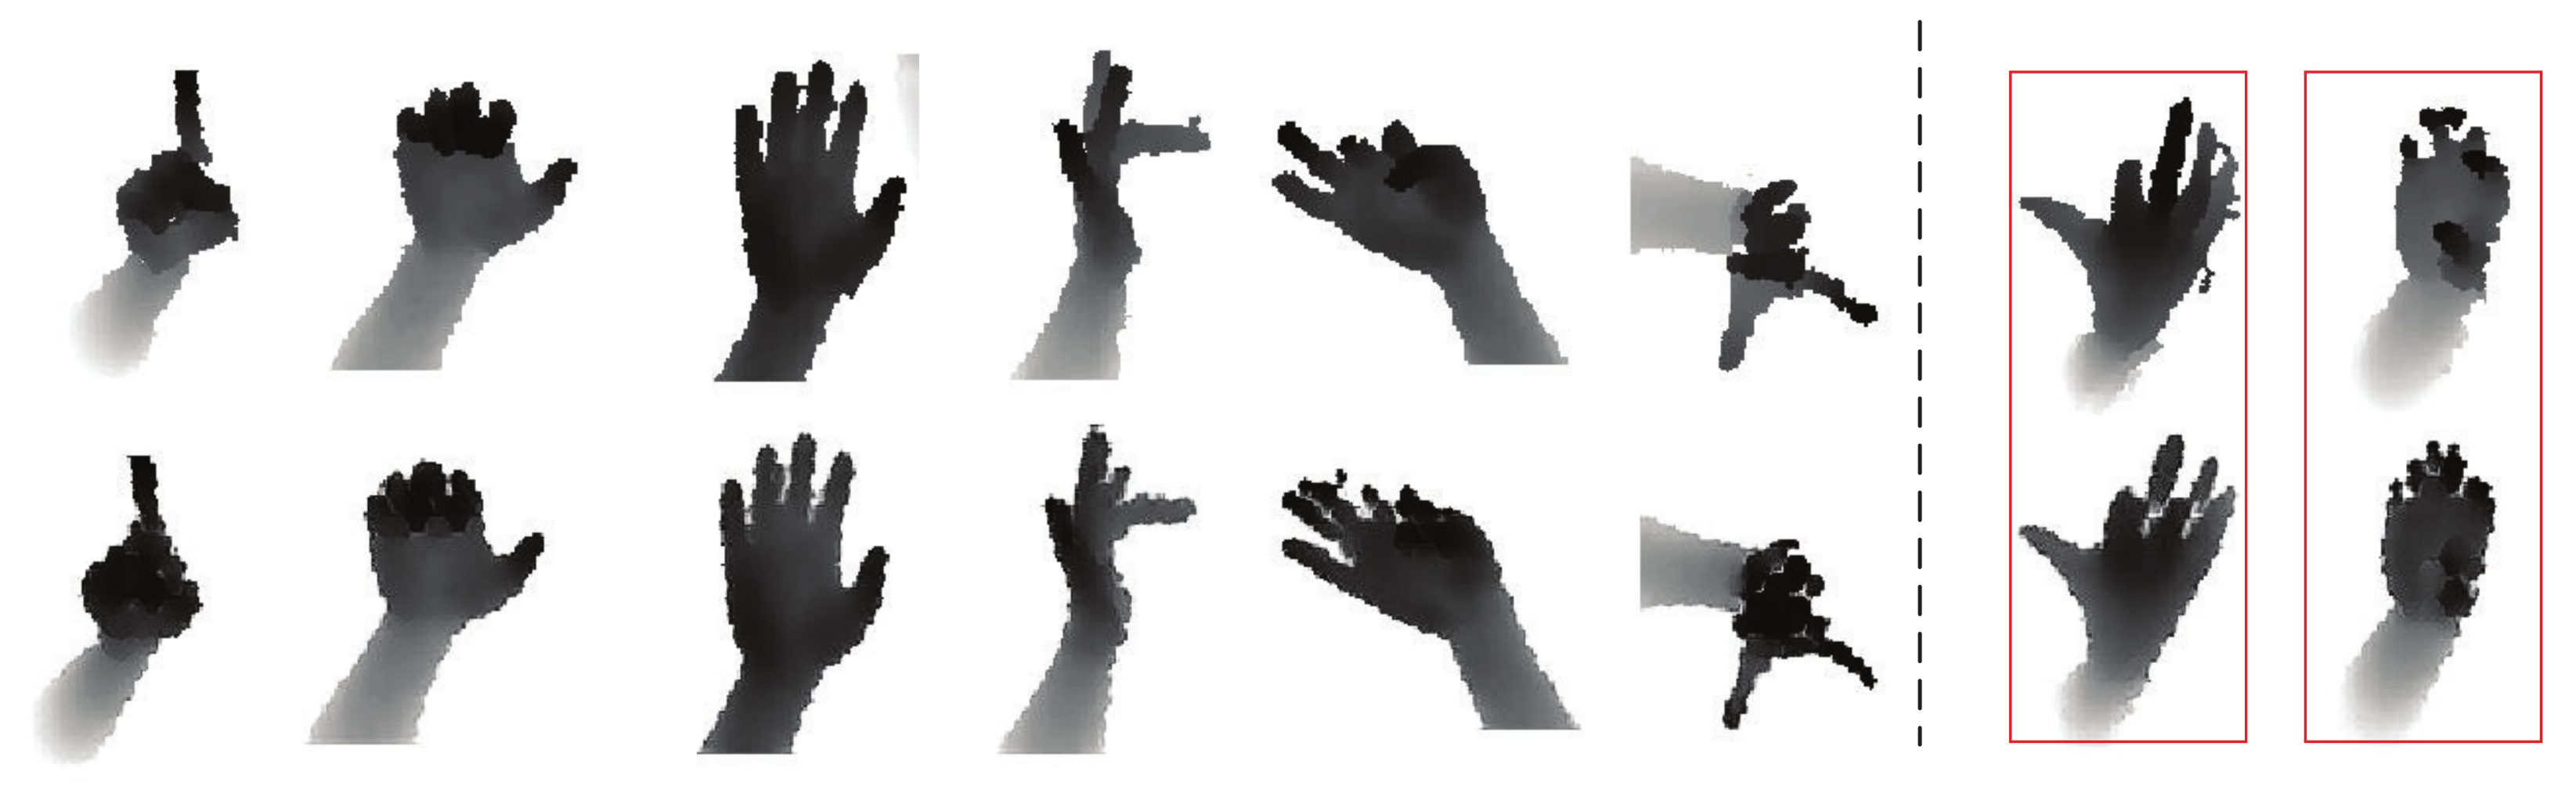 hands pose gesture 3d rendering 10922214 PNG